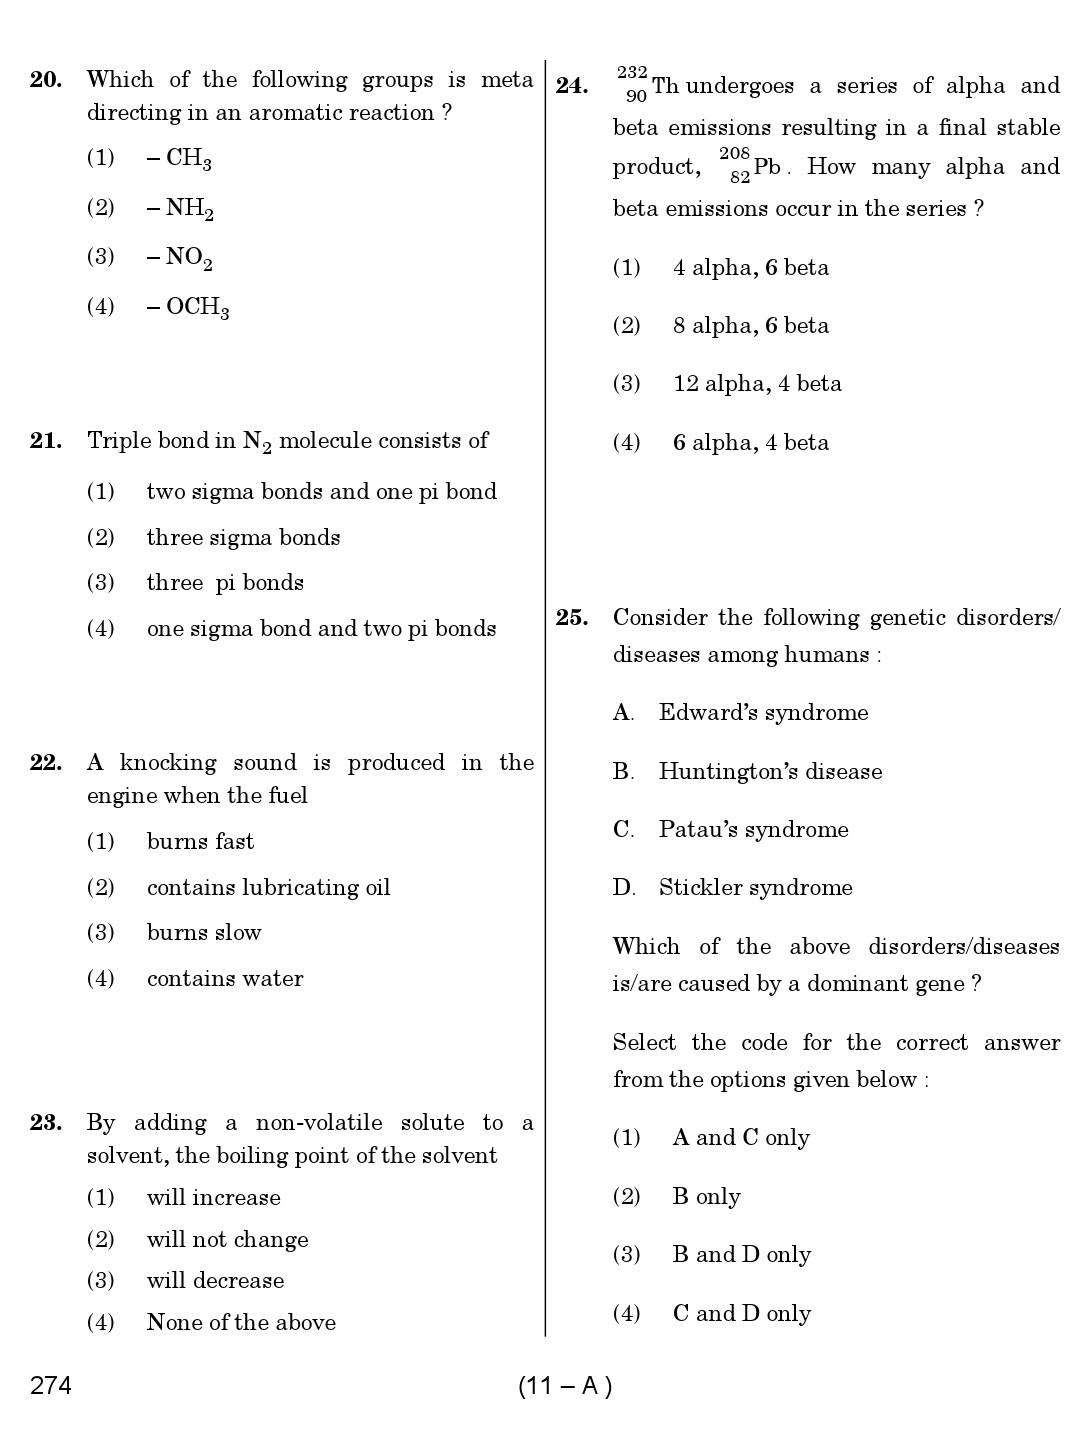 Karnataka PSC Science Teacher Exam Sample Question Paper Subject code 274 11